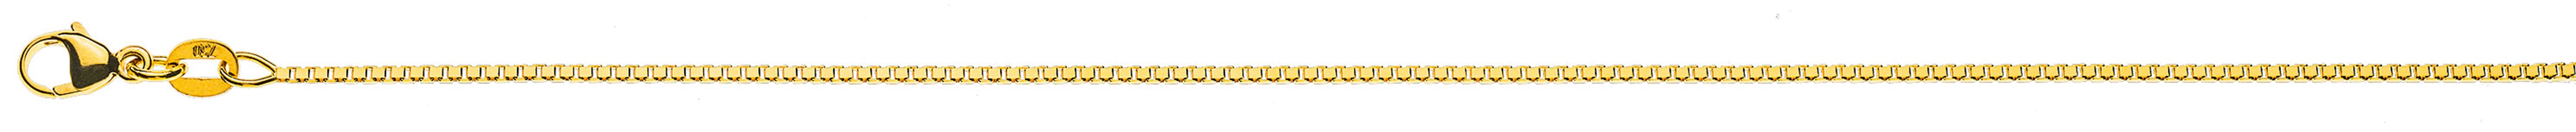 AURONOS Prestige Necklace yellow gold 18K Venetian chain diamond 38cm 1.1mm